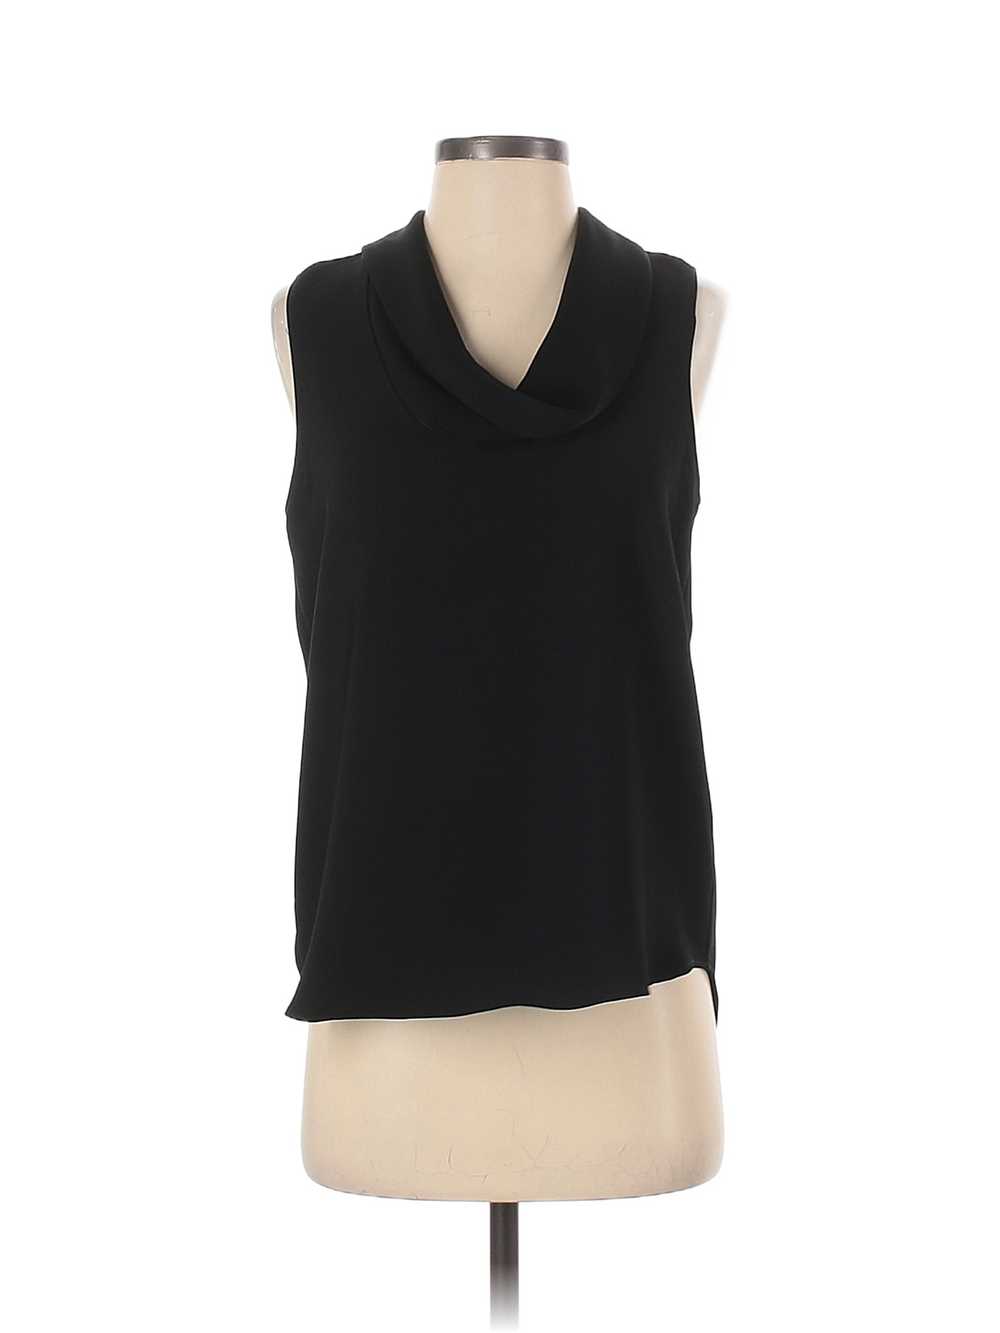 Zara Basic Women Black Sleeveless Blouse S - image 1